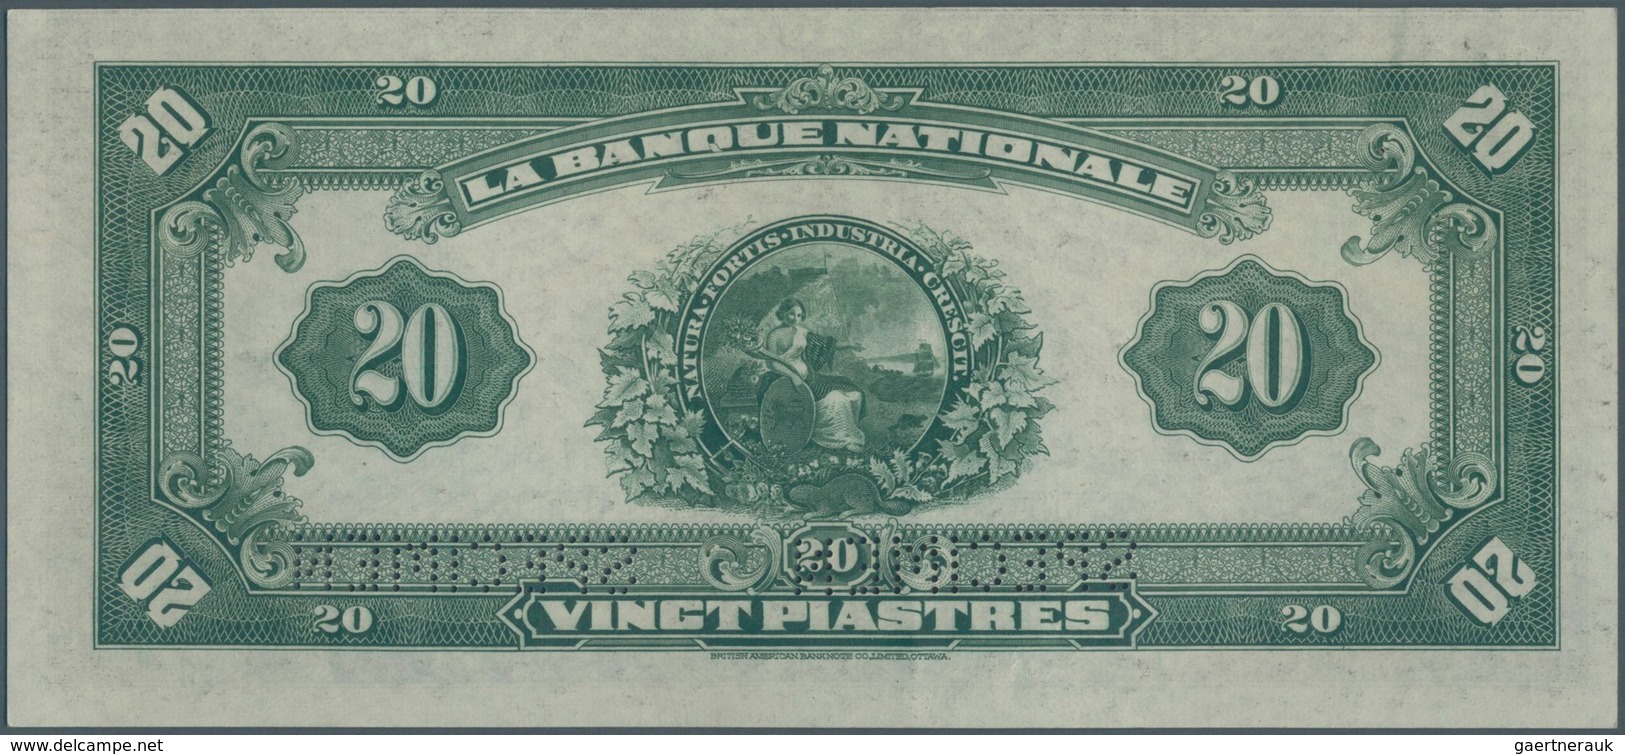 Canada: La Banque Nationale 20 Dollars 1922 SPECIMEN, P.S873s In Very Nice Condition, Just A Bit Dec - Canada